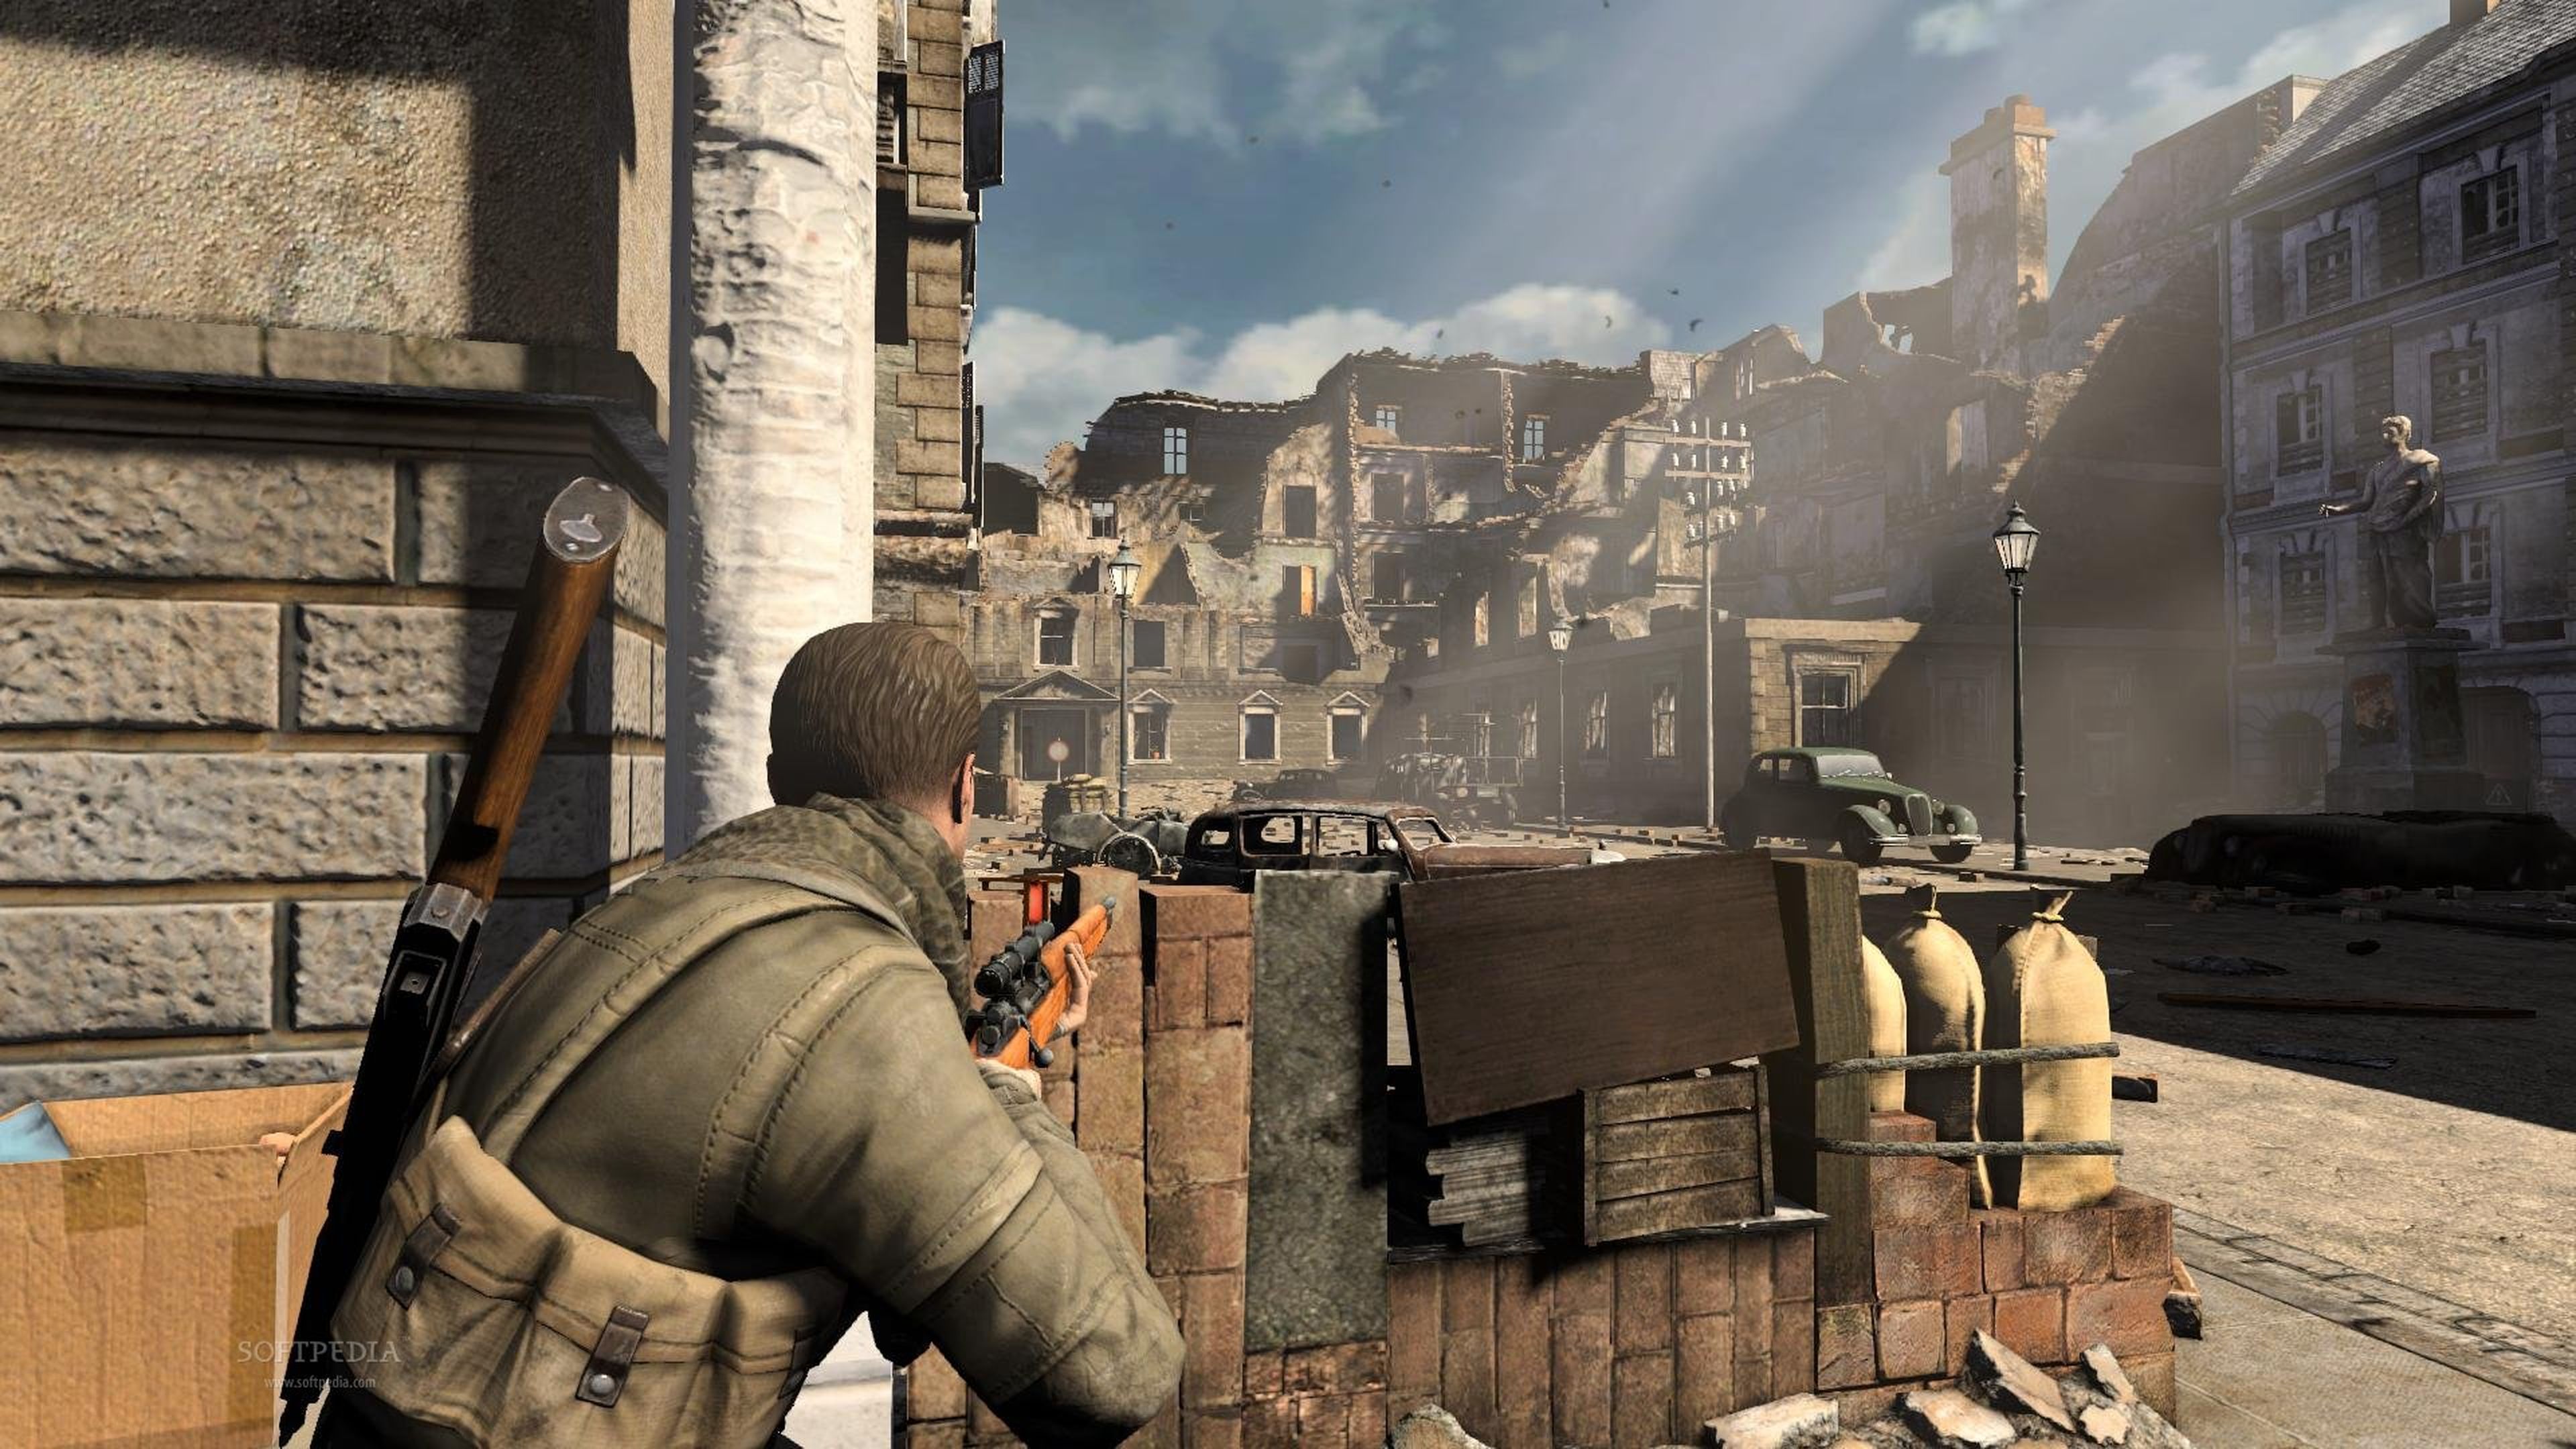 Sniper Elite V2 gratis en Steam momentáneamente